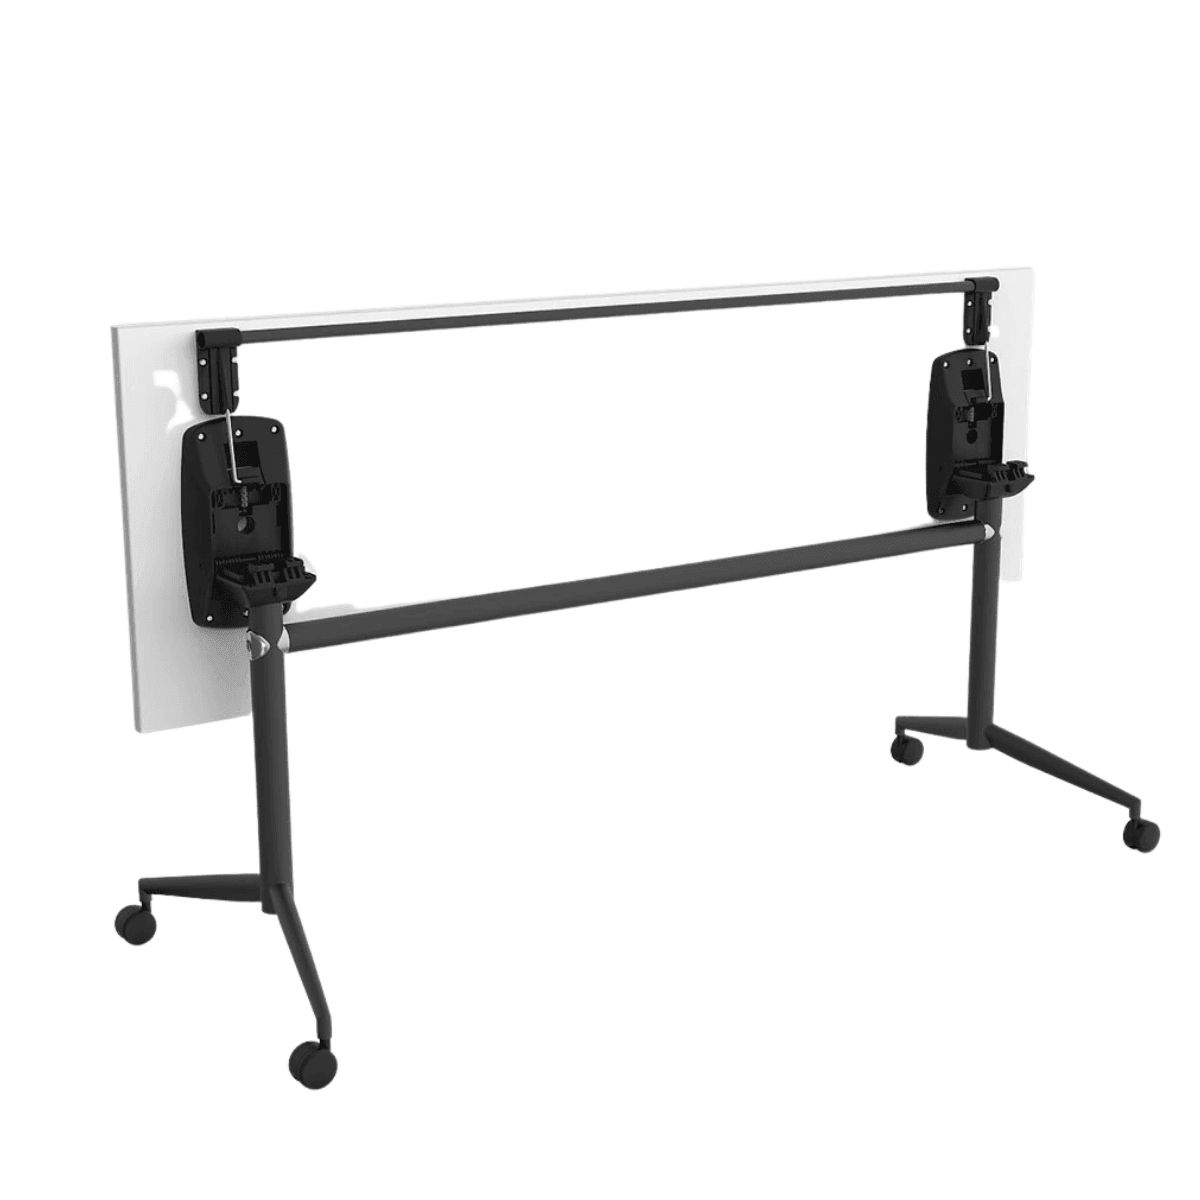 UNI Flip/ Folding Table - Office Furniture Company 